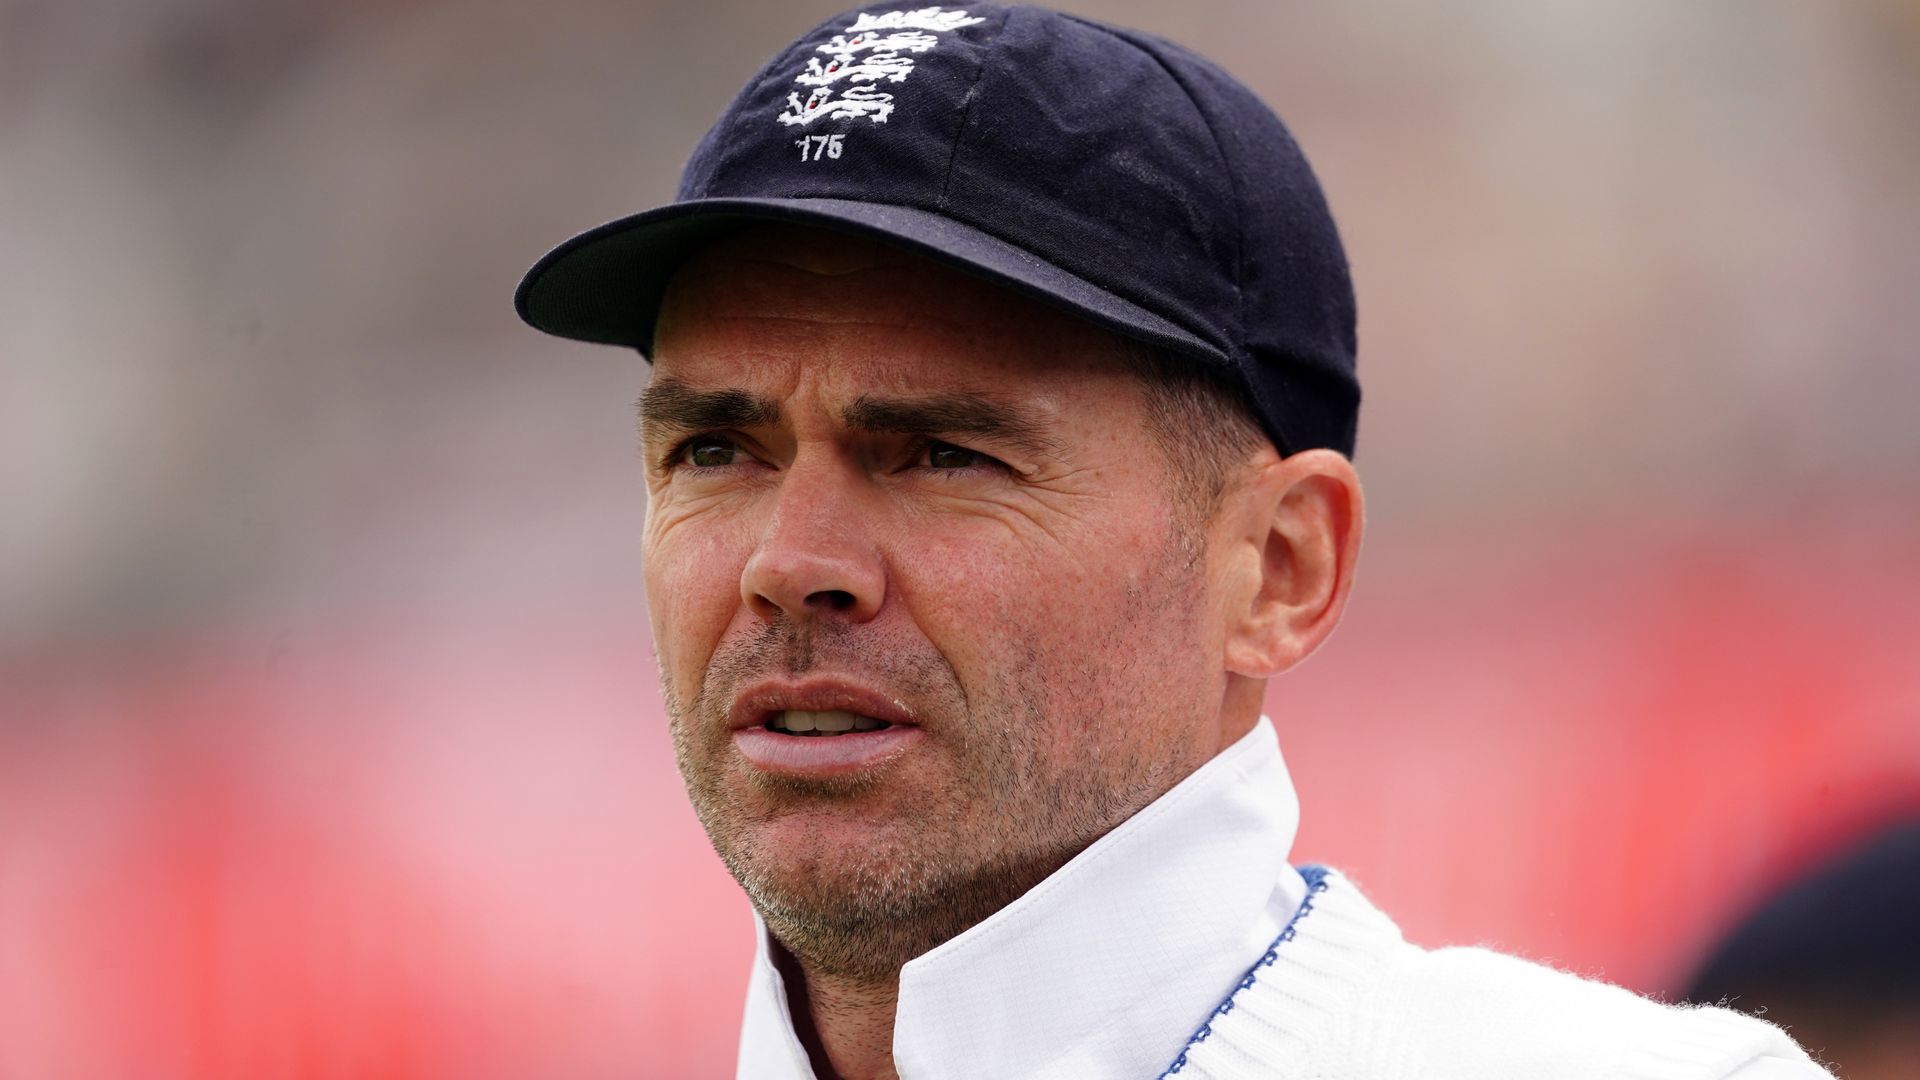 England legend James Anderson announces retirement from Test cricket